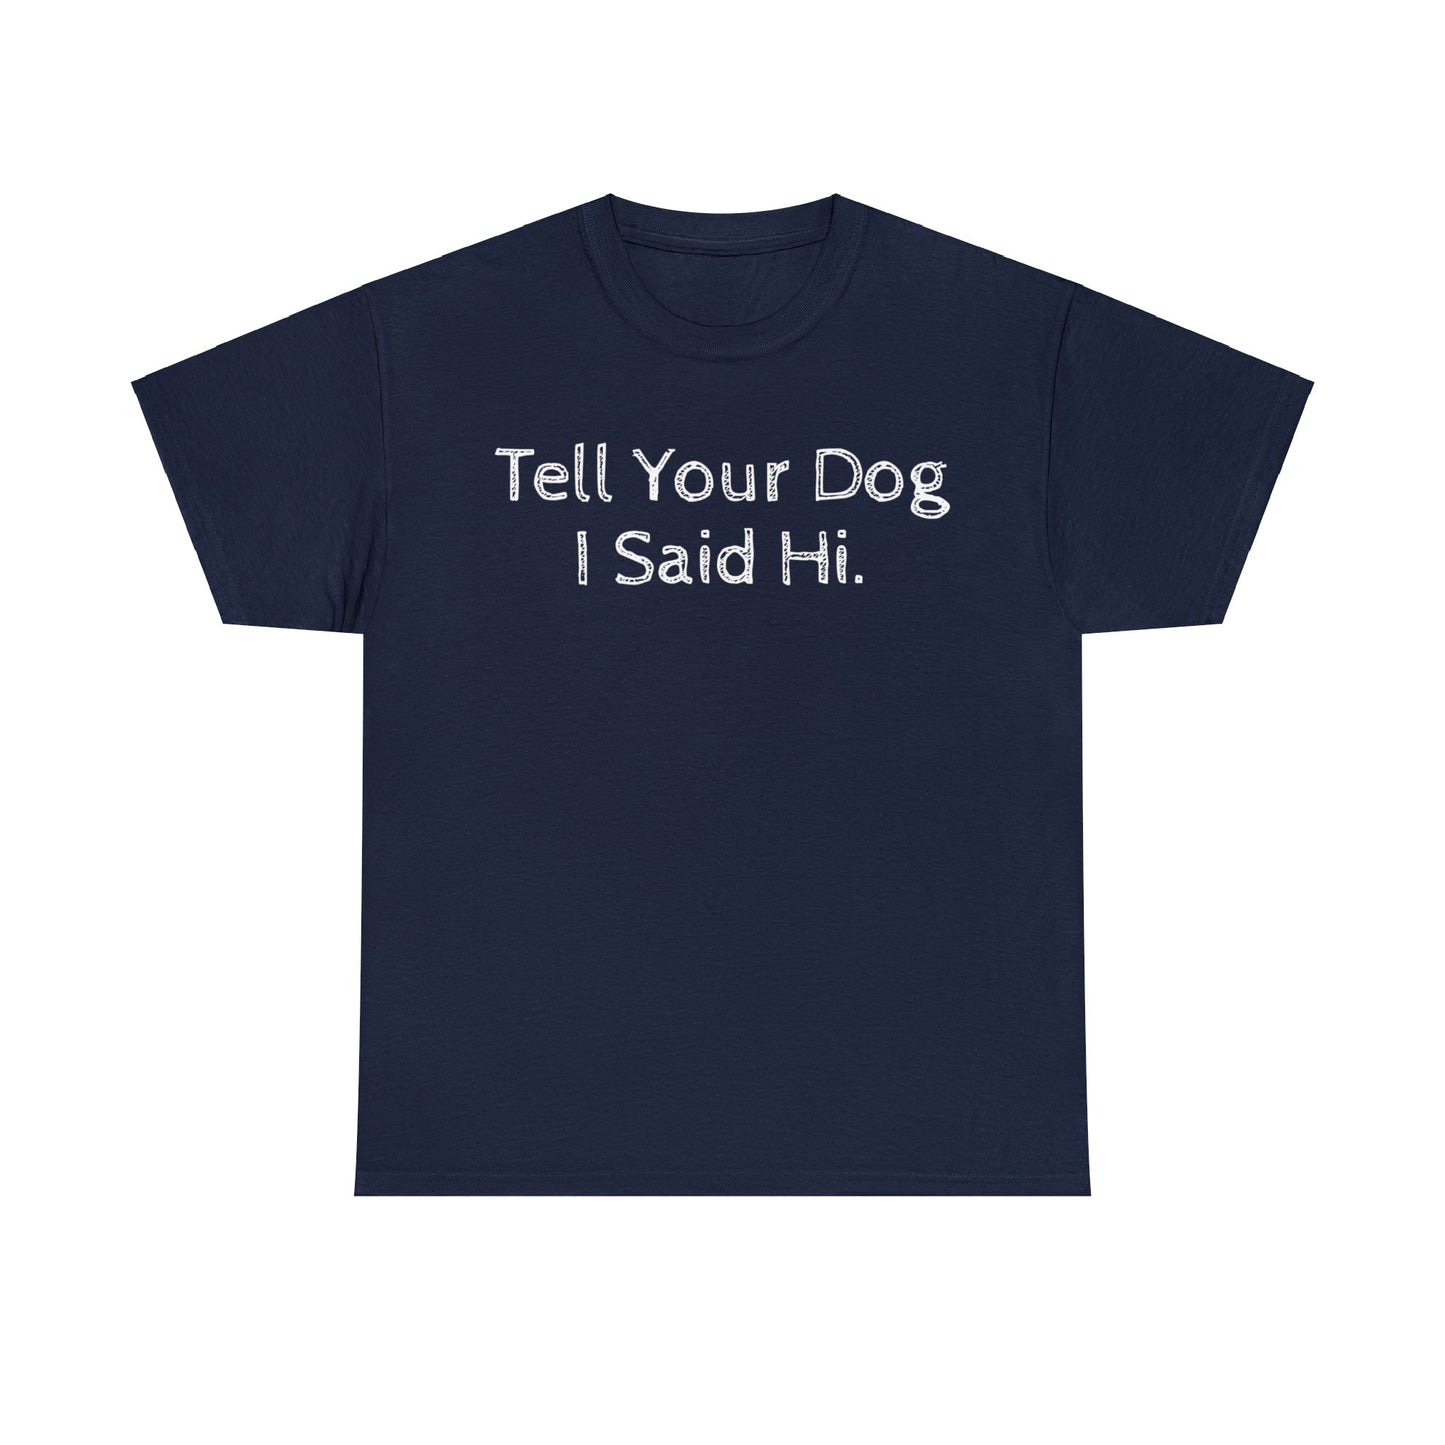 Funny Dog Sayings on t-shirts - Tell Your Dog I Said Hi